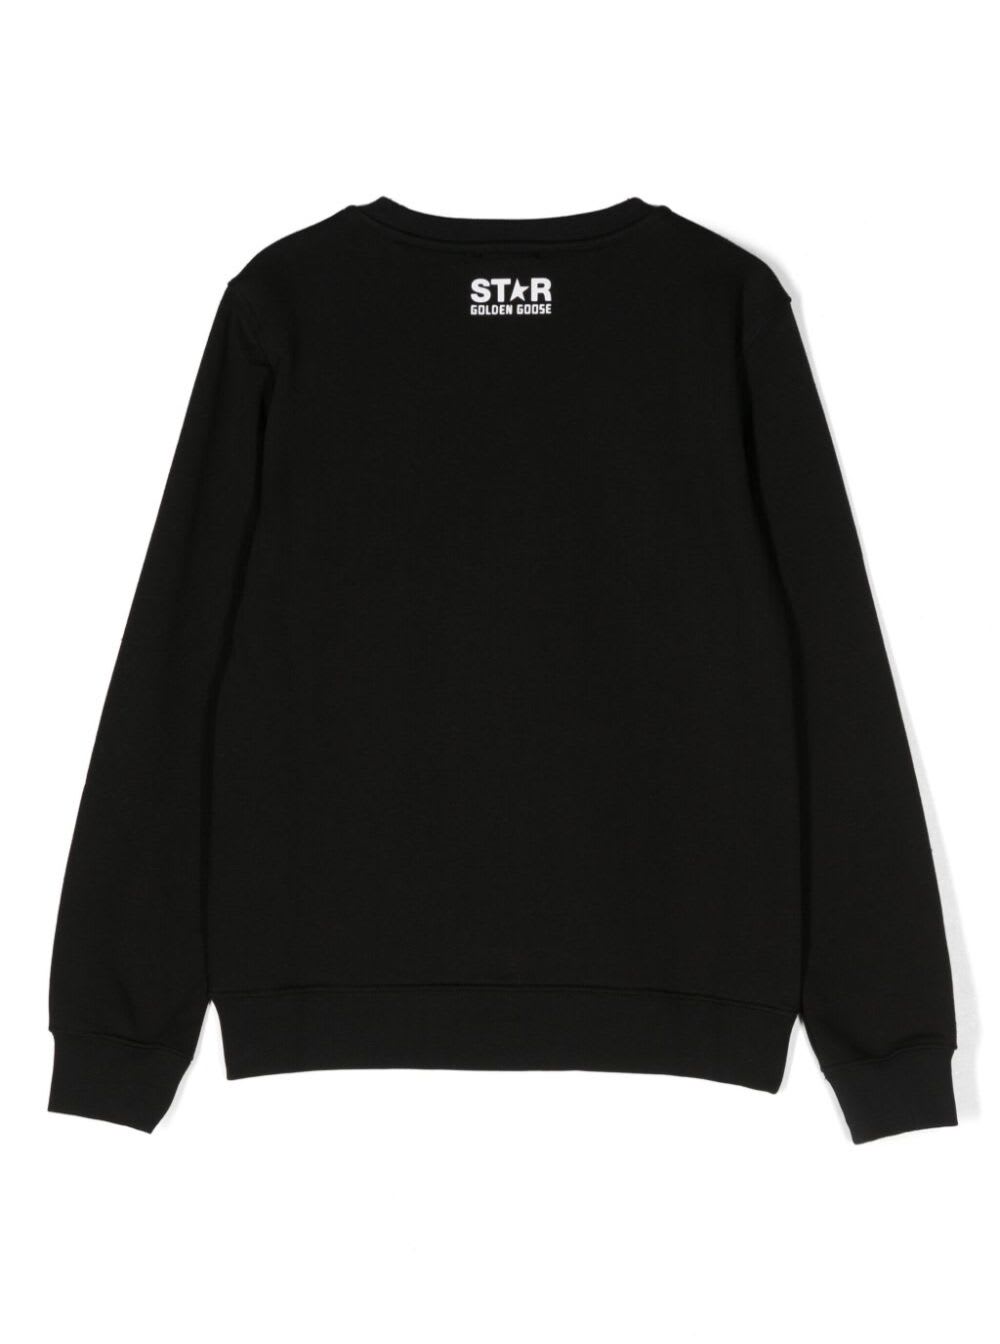 Shop Golden Goose Star Boys Crewneck Regular Sweatshirt / Big Star Printed Include Cod Gyp In Black